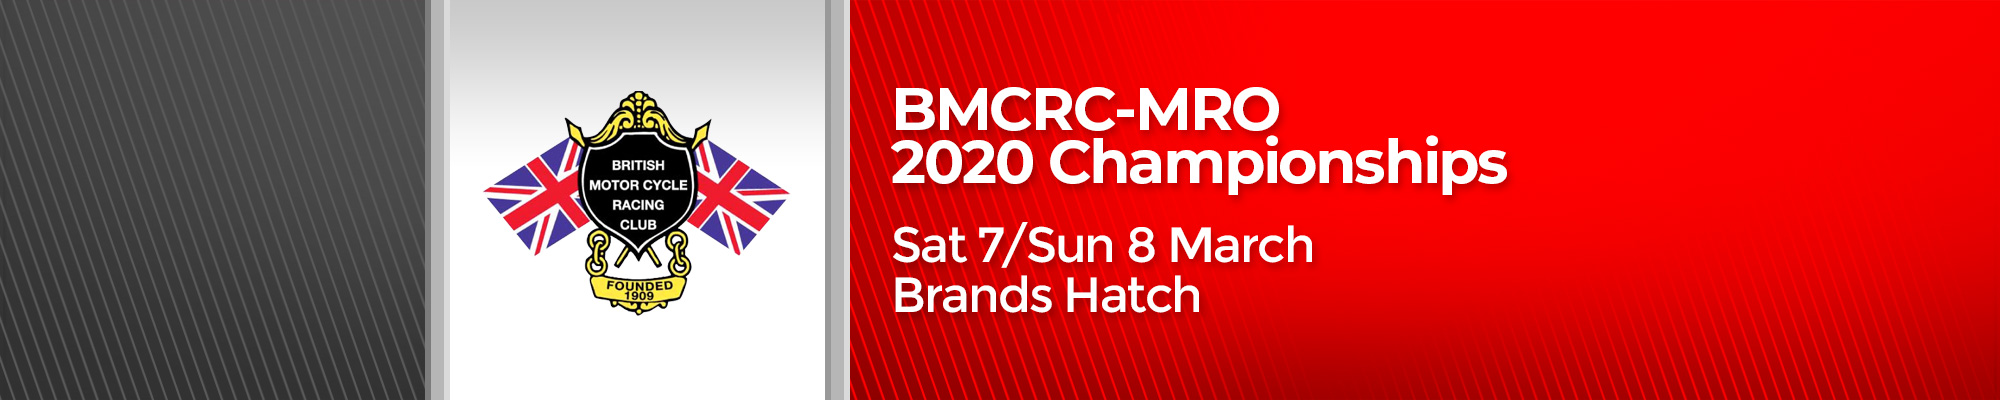 BMCRC-MRO 2020 Championships